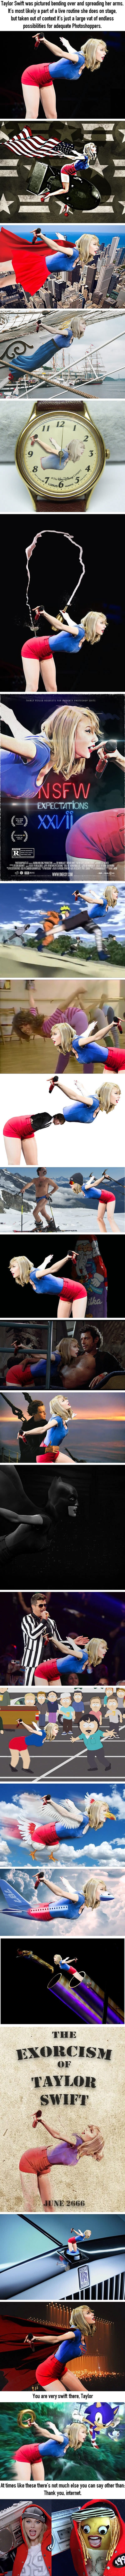 Photoshop battle of Taylor Swift